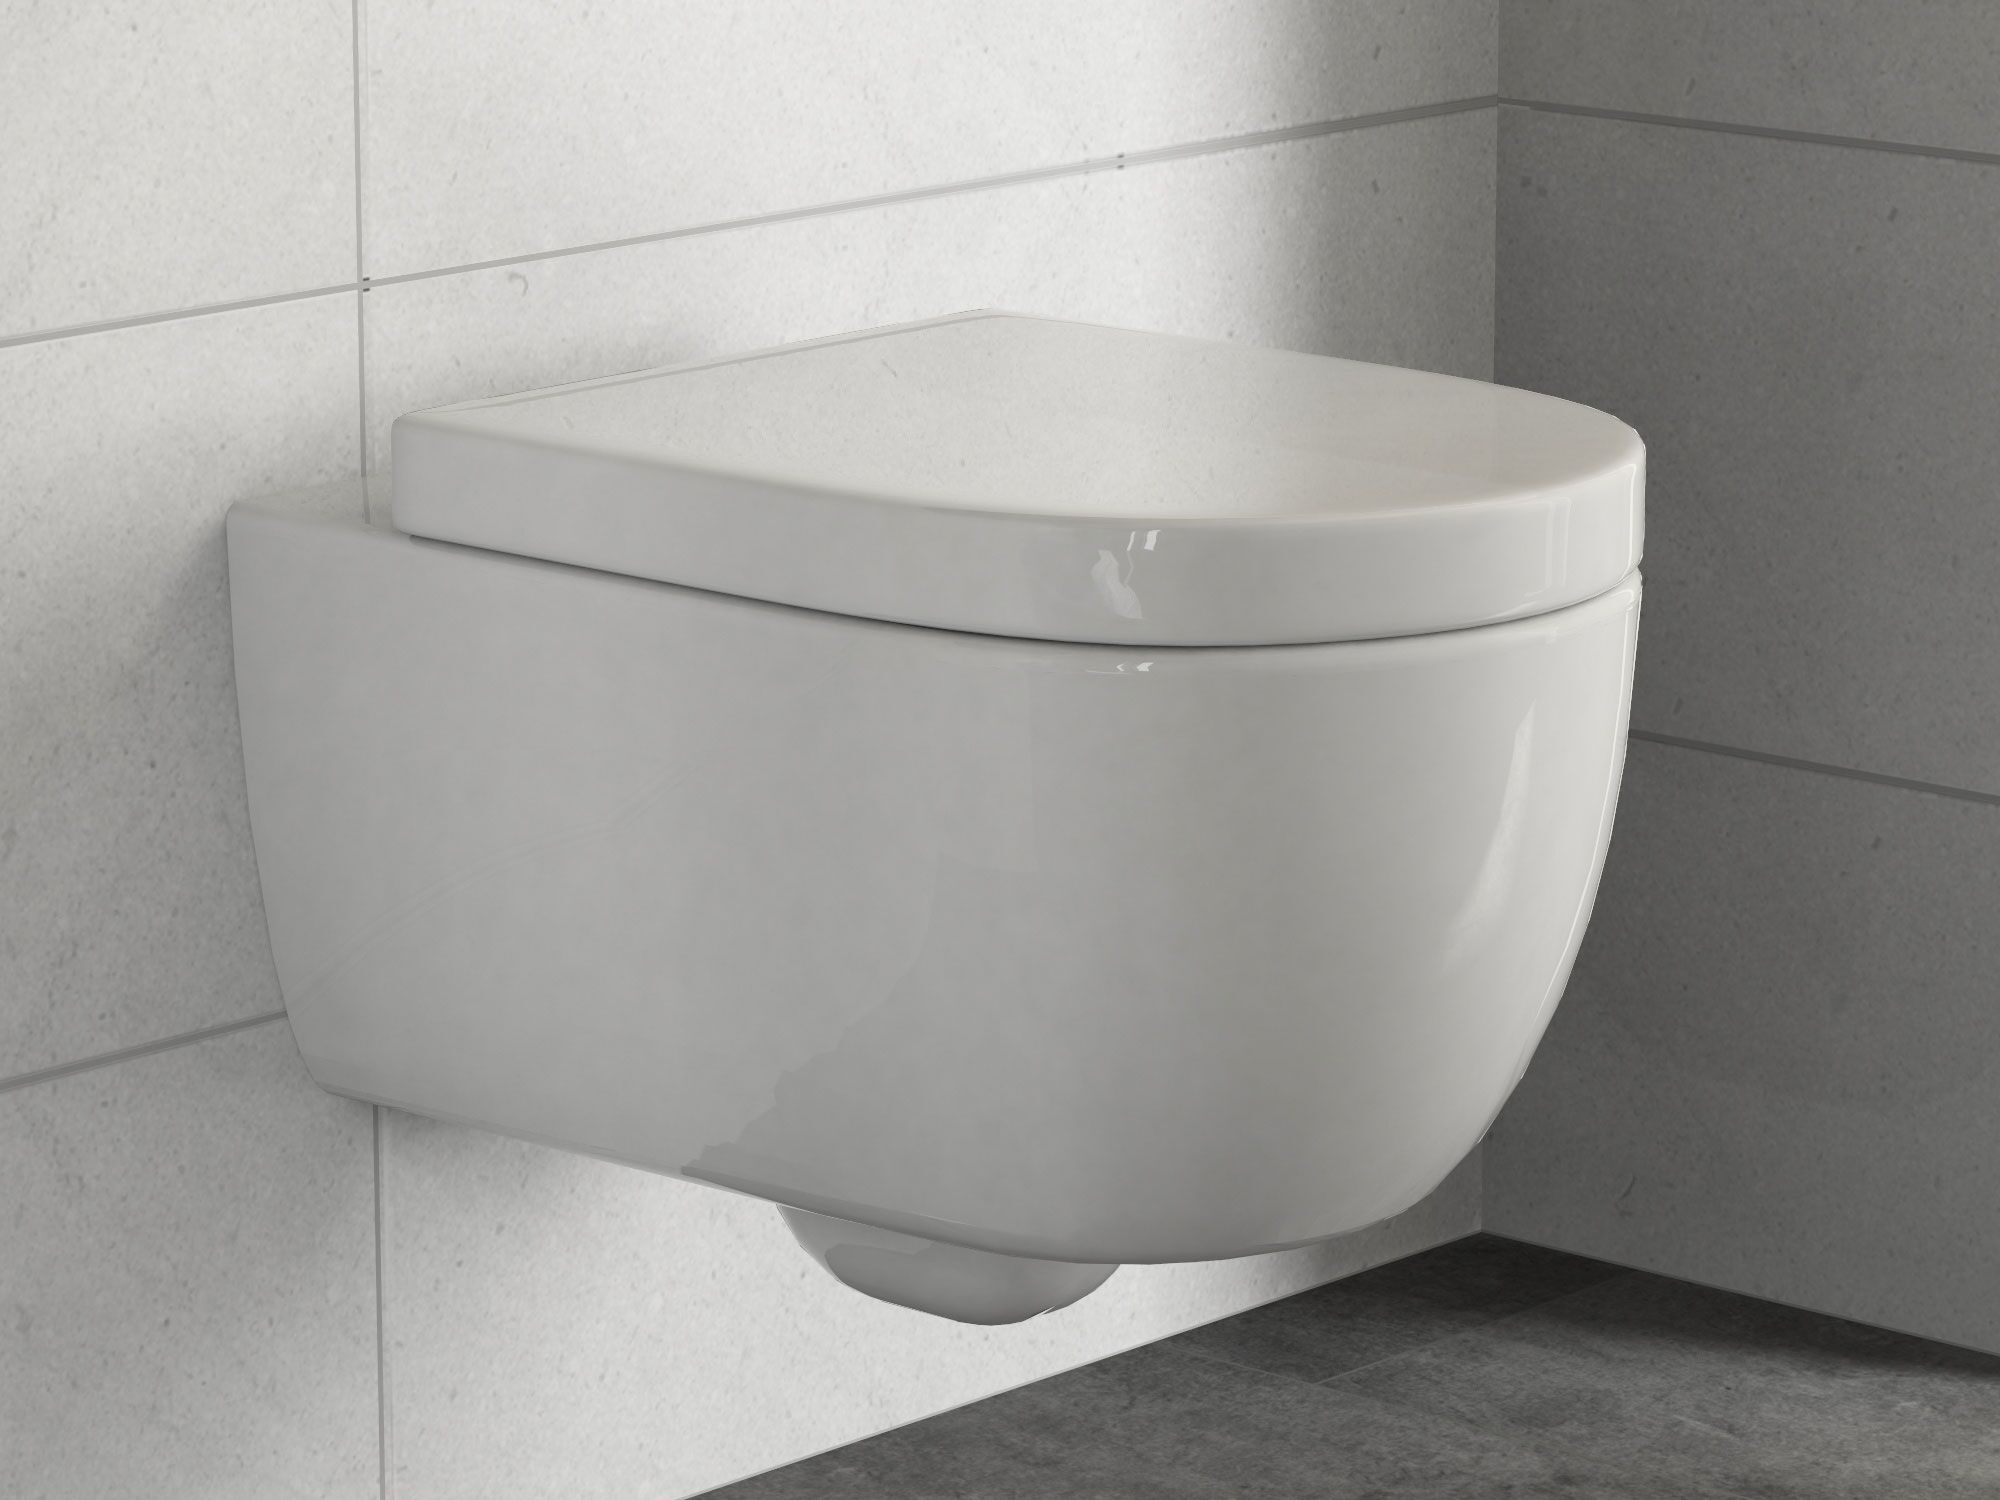 Sp&uuml;lrandloses WC mit abnehmbarem softclose Toiletten Sitz - Design H&auml;nge Wand-WC - Toilette